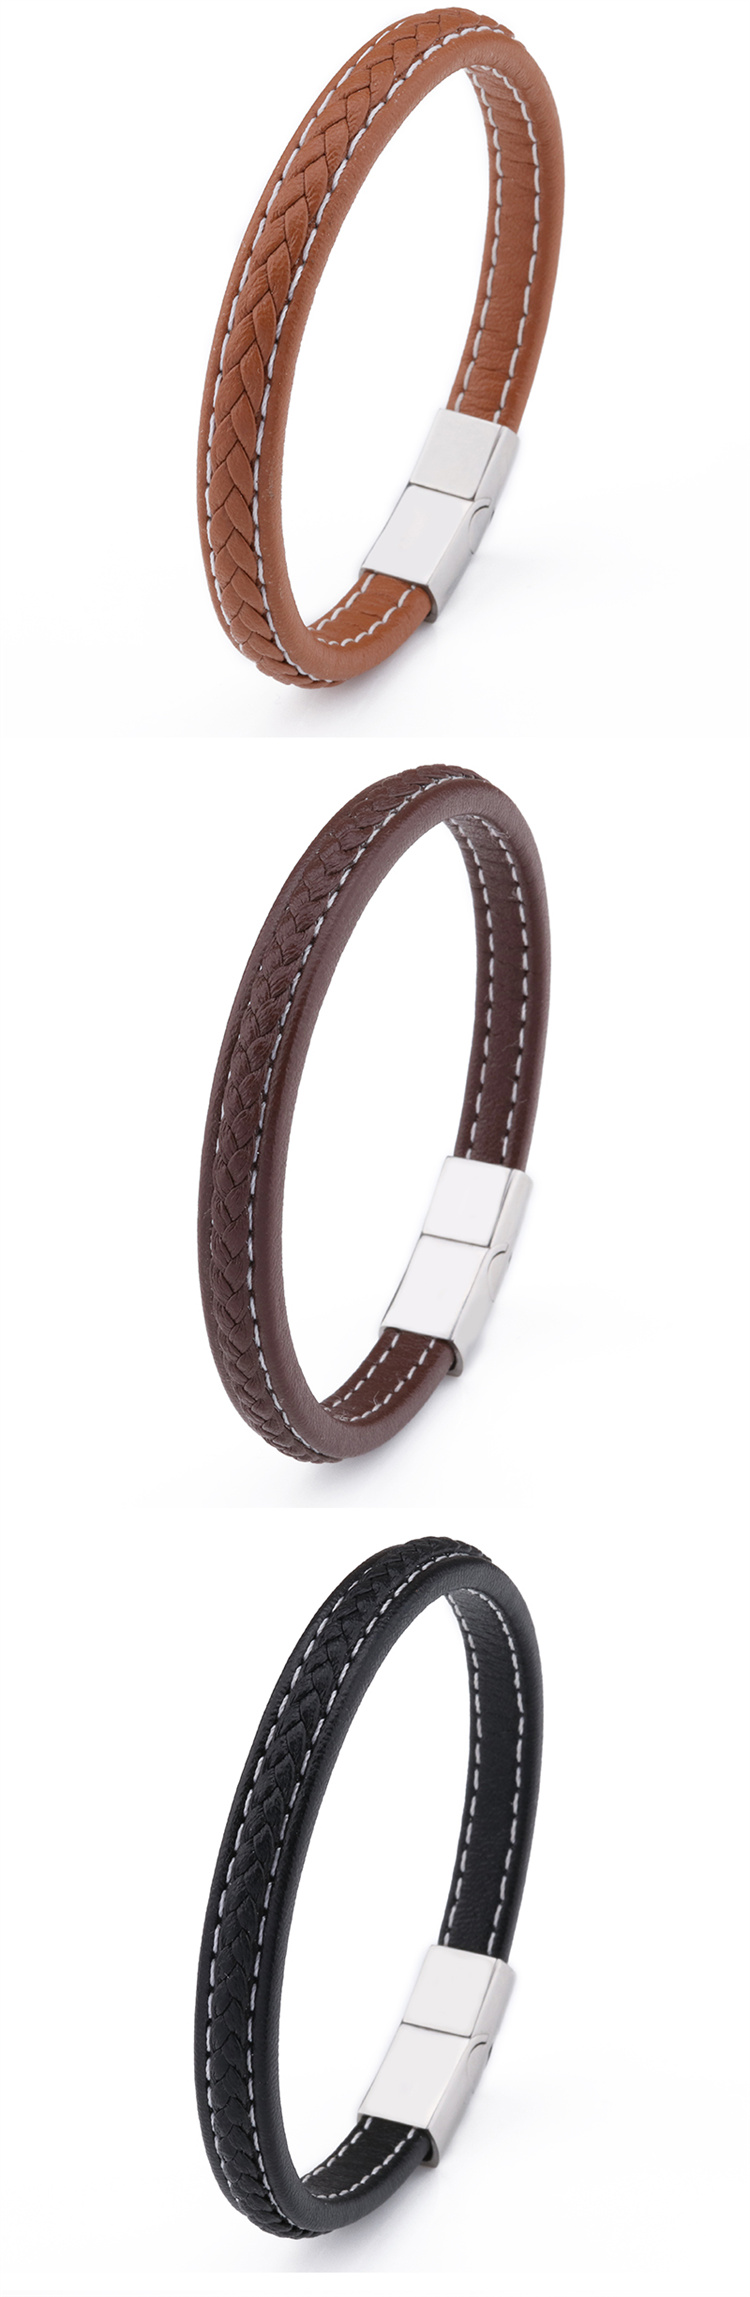 ZG Fashion Jewelry Leather bracelet with Stainless Steel Buckle bracelets Punk Gift Charm Bracelet For Men 